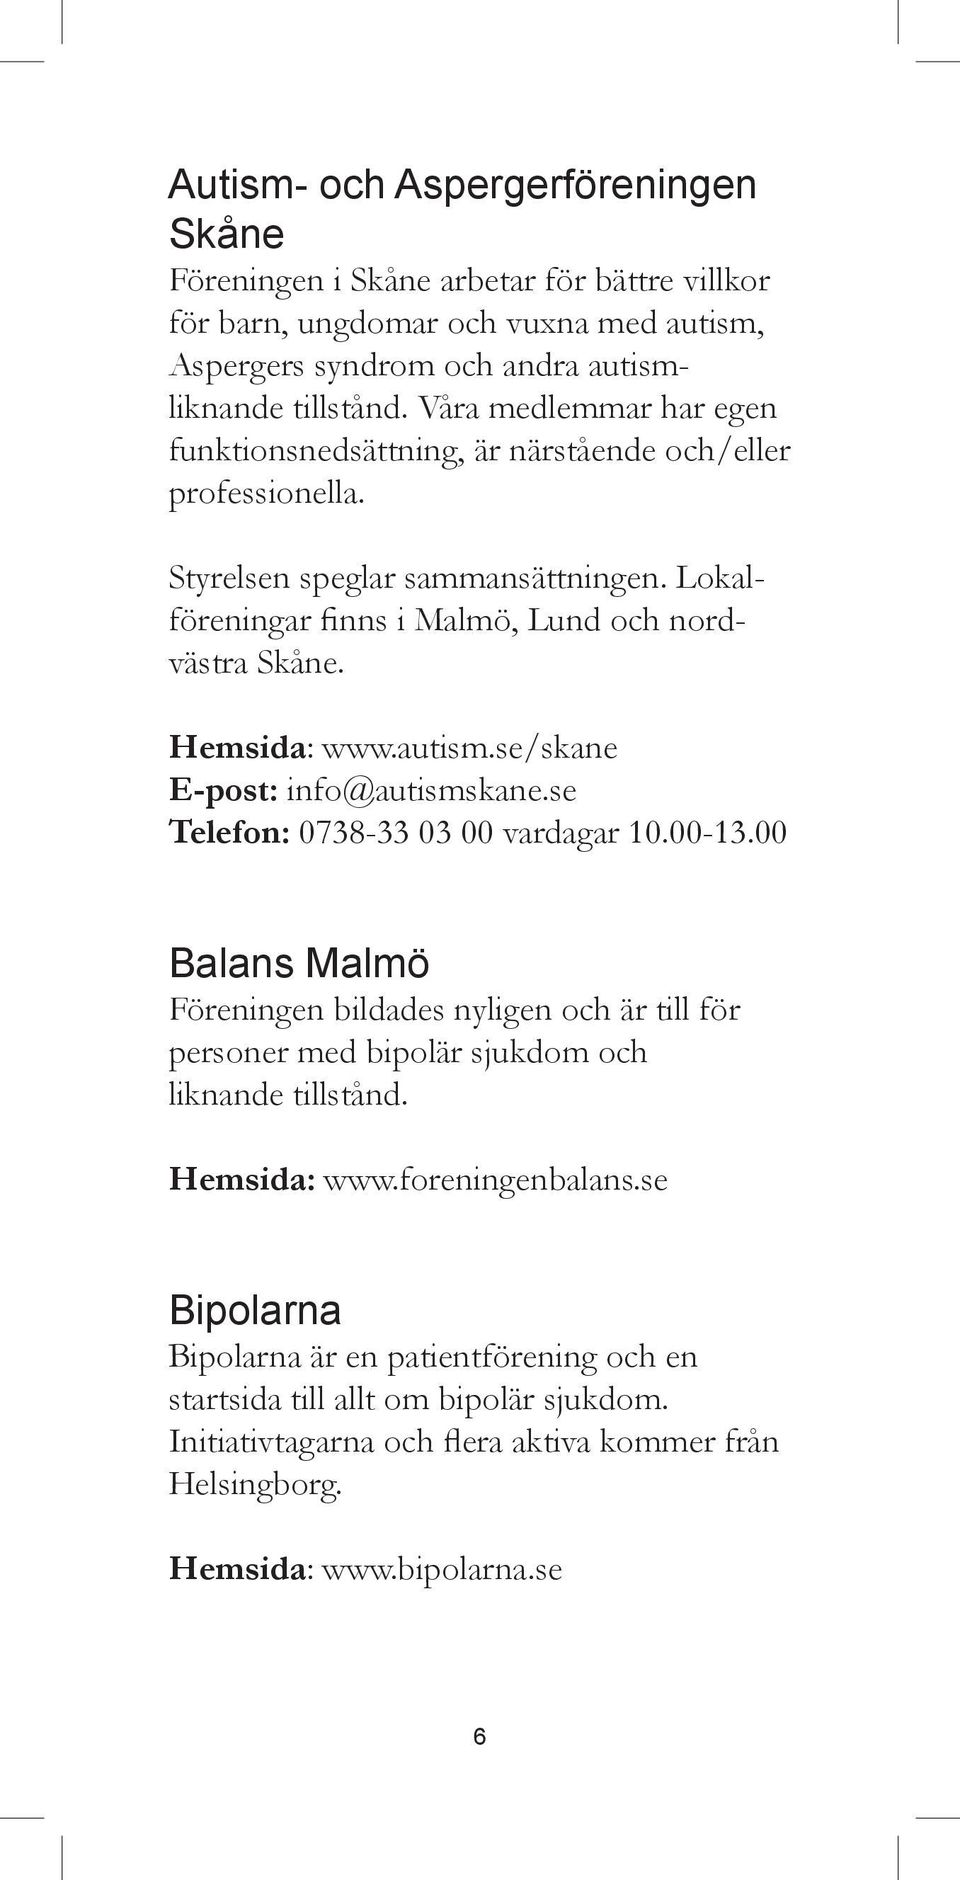 autism.se/skane E-post: info@autismskane.se Telefon: 0738-33 03 00 vardagar 10.00-13.